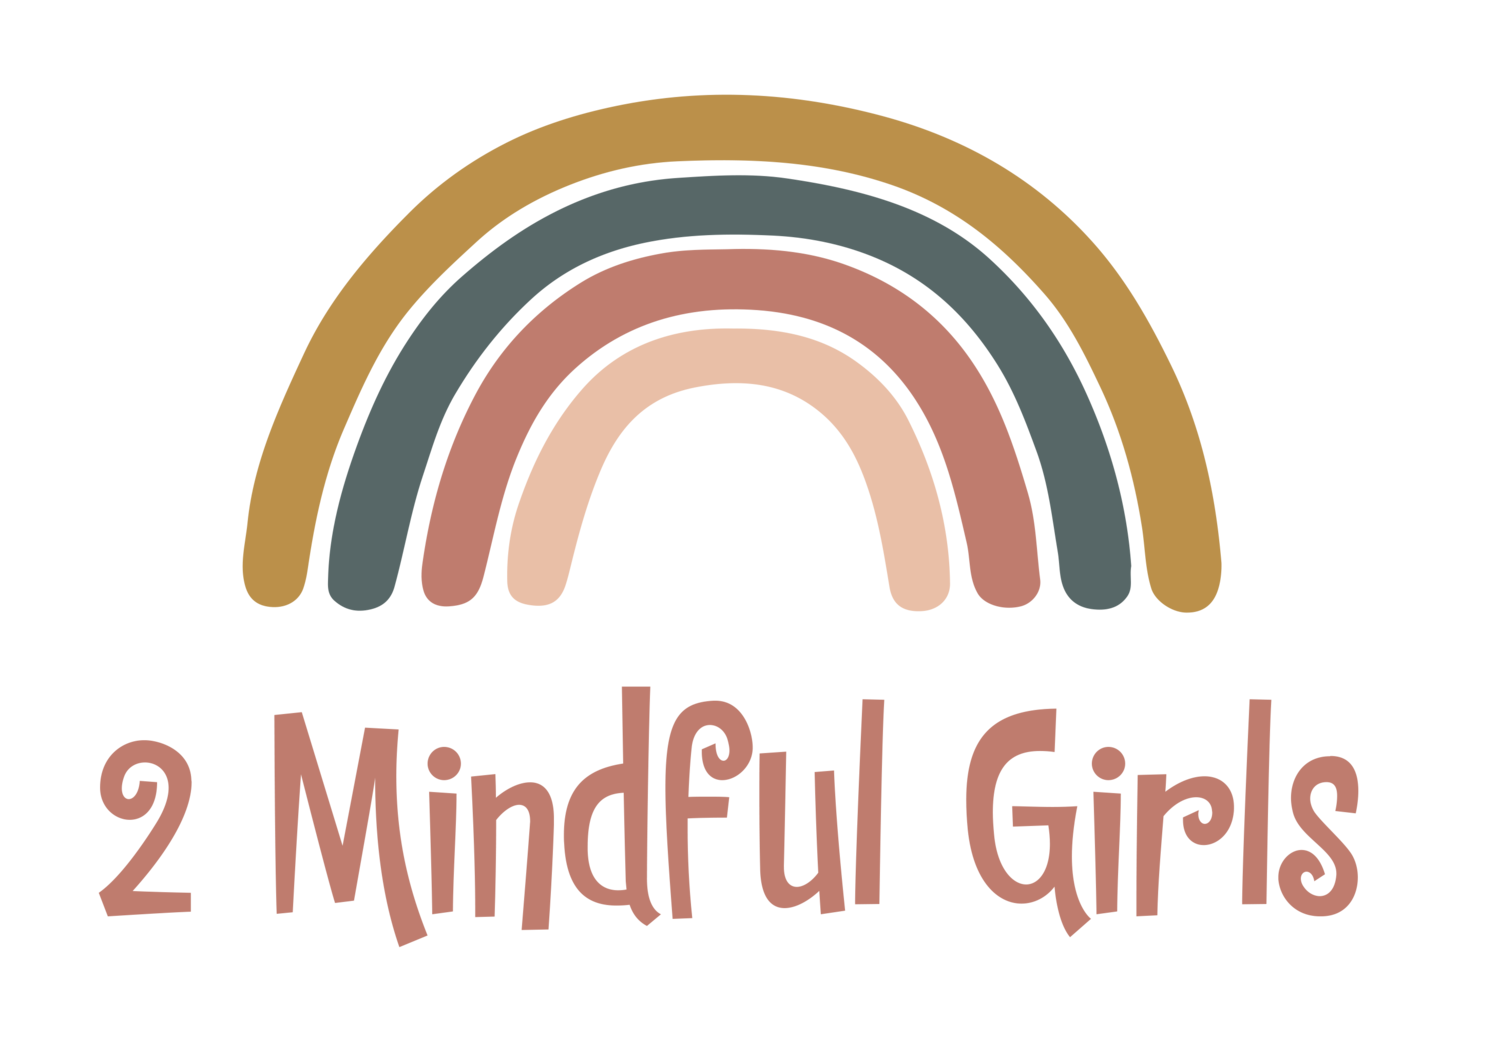 2 Mindful Girls